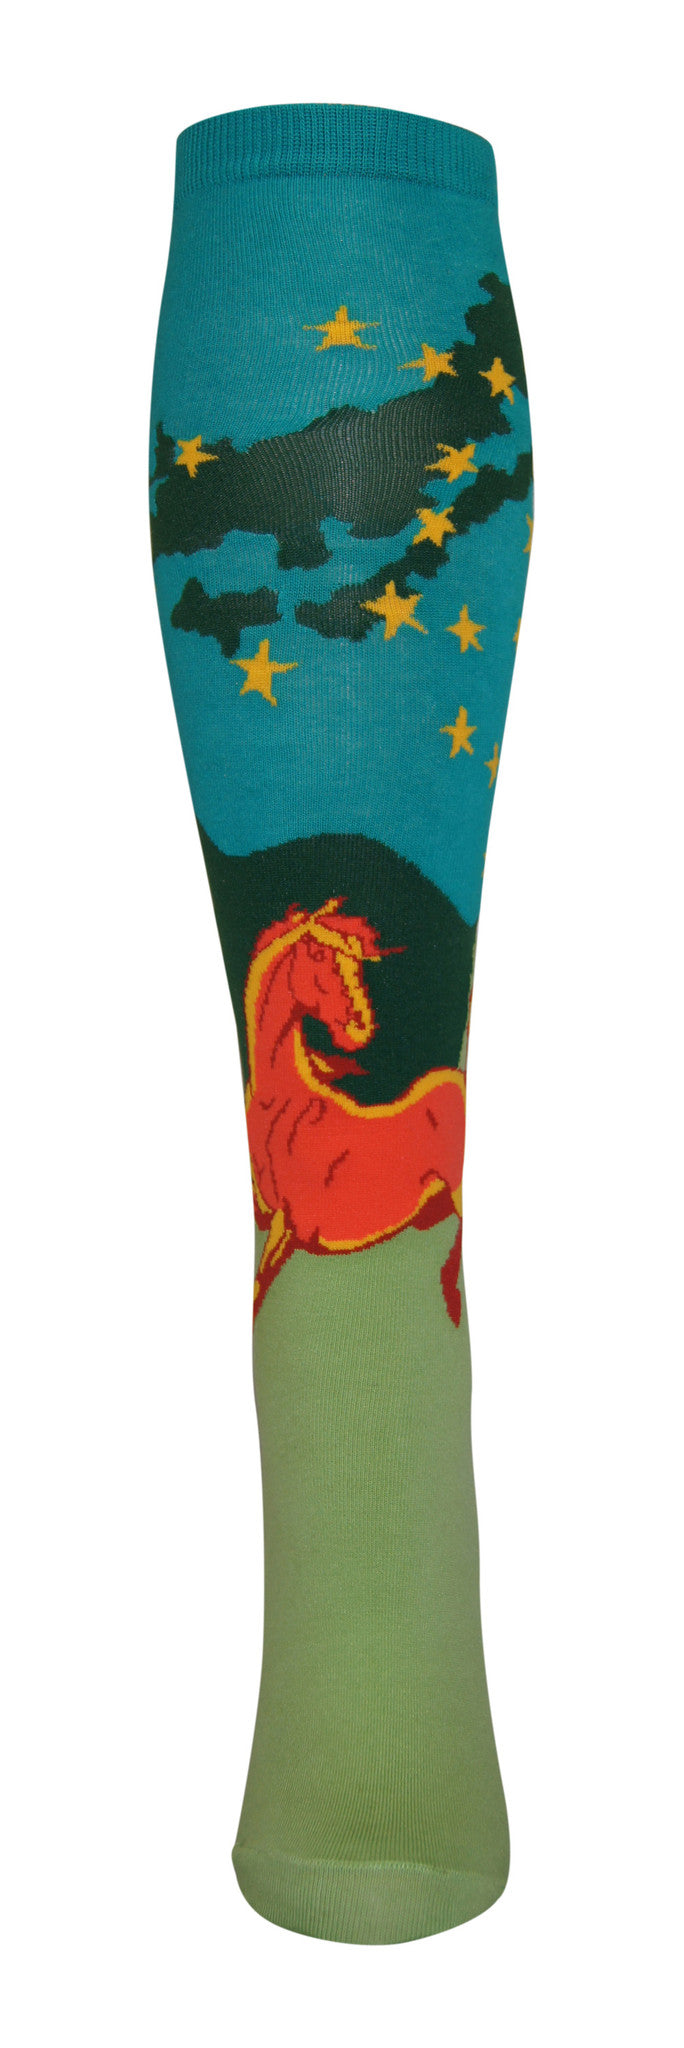 "Snarky Stars" cotton-rich knee sock from lucky7socks.com